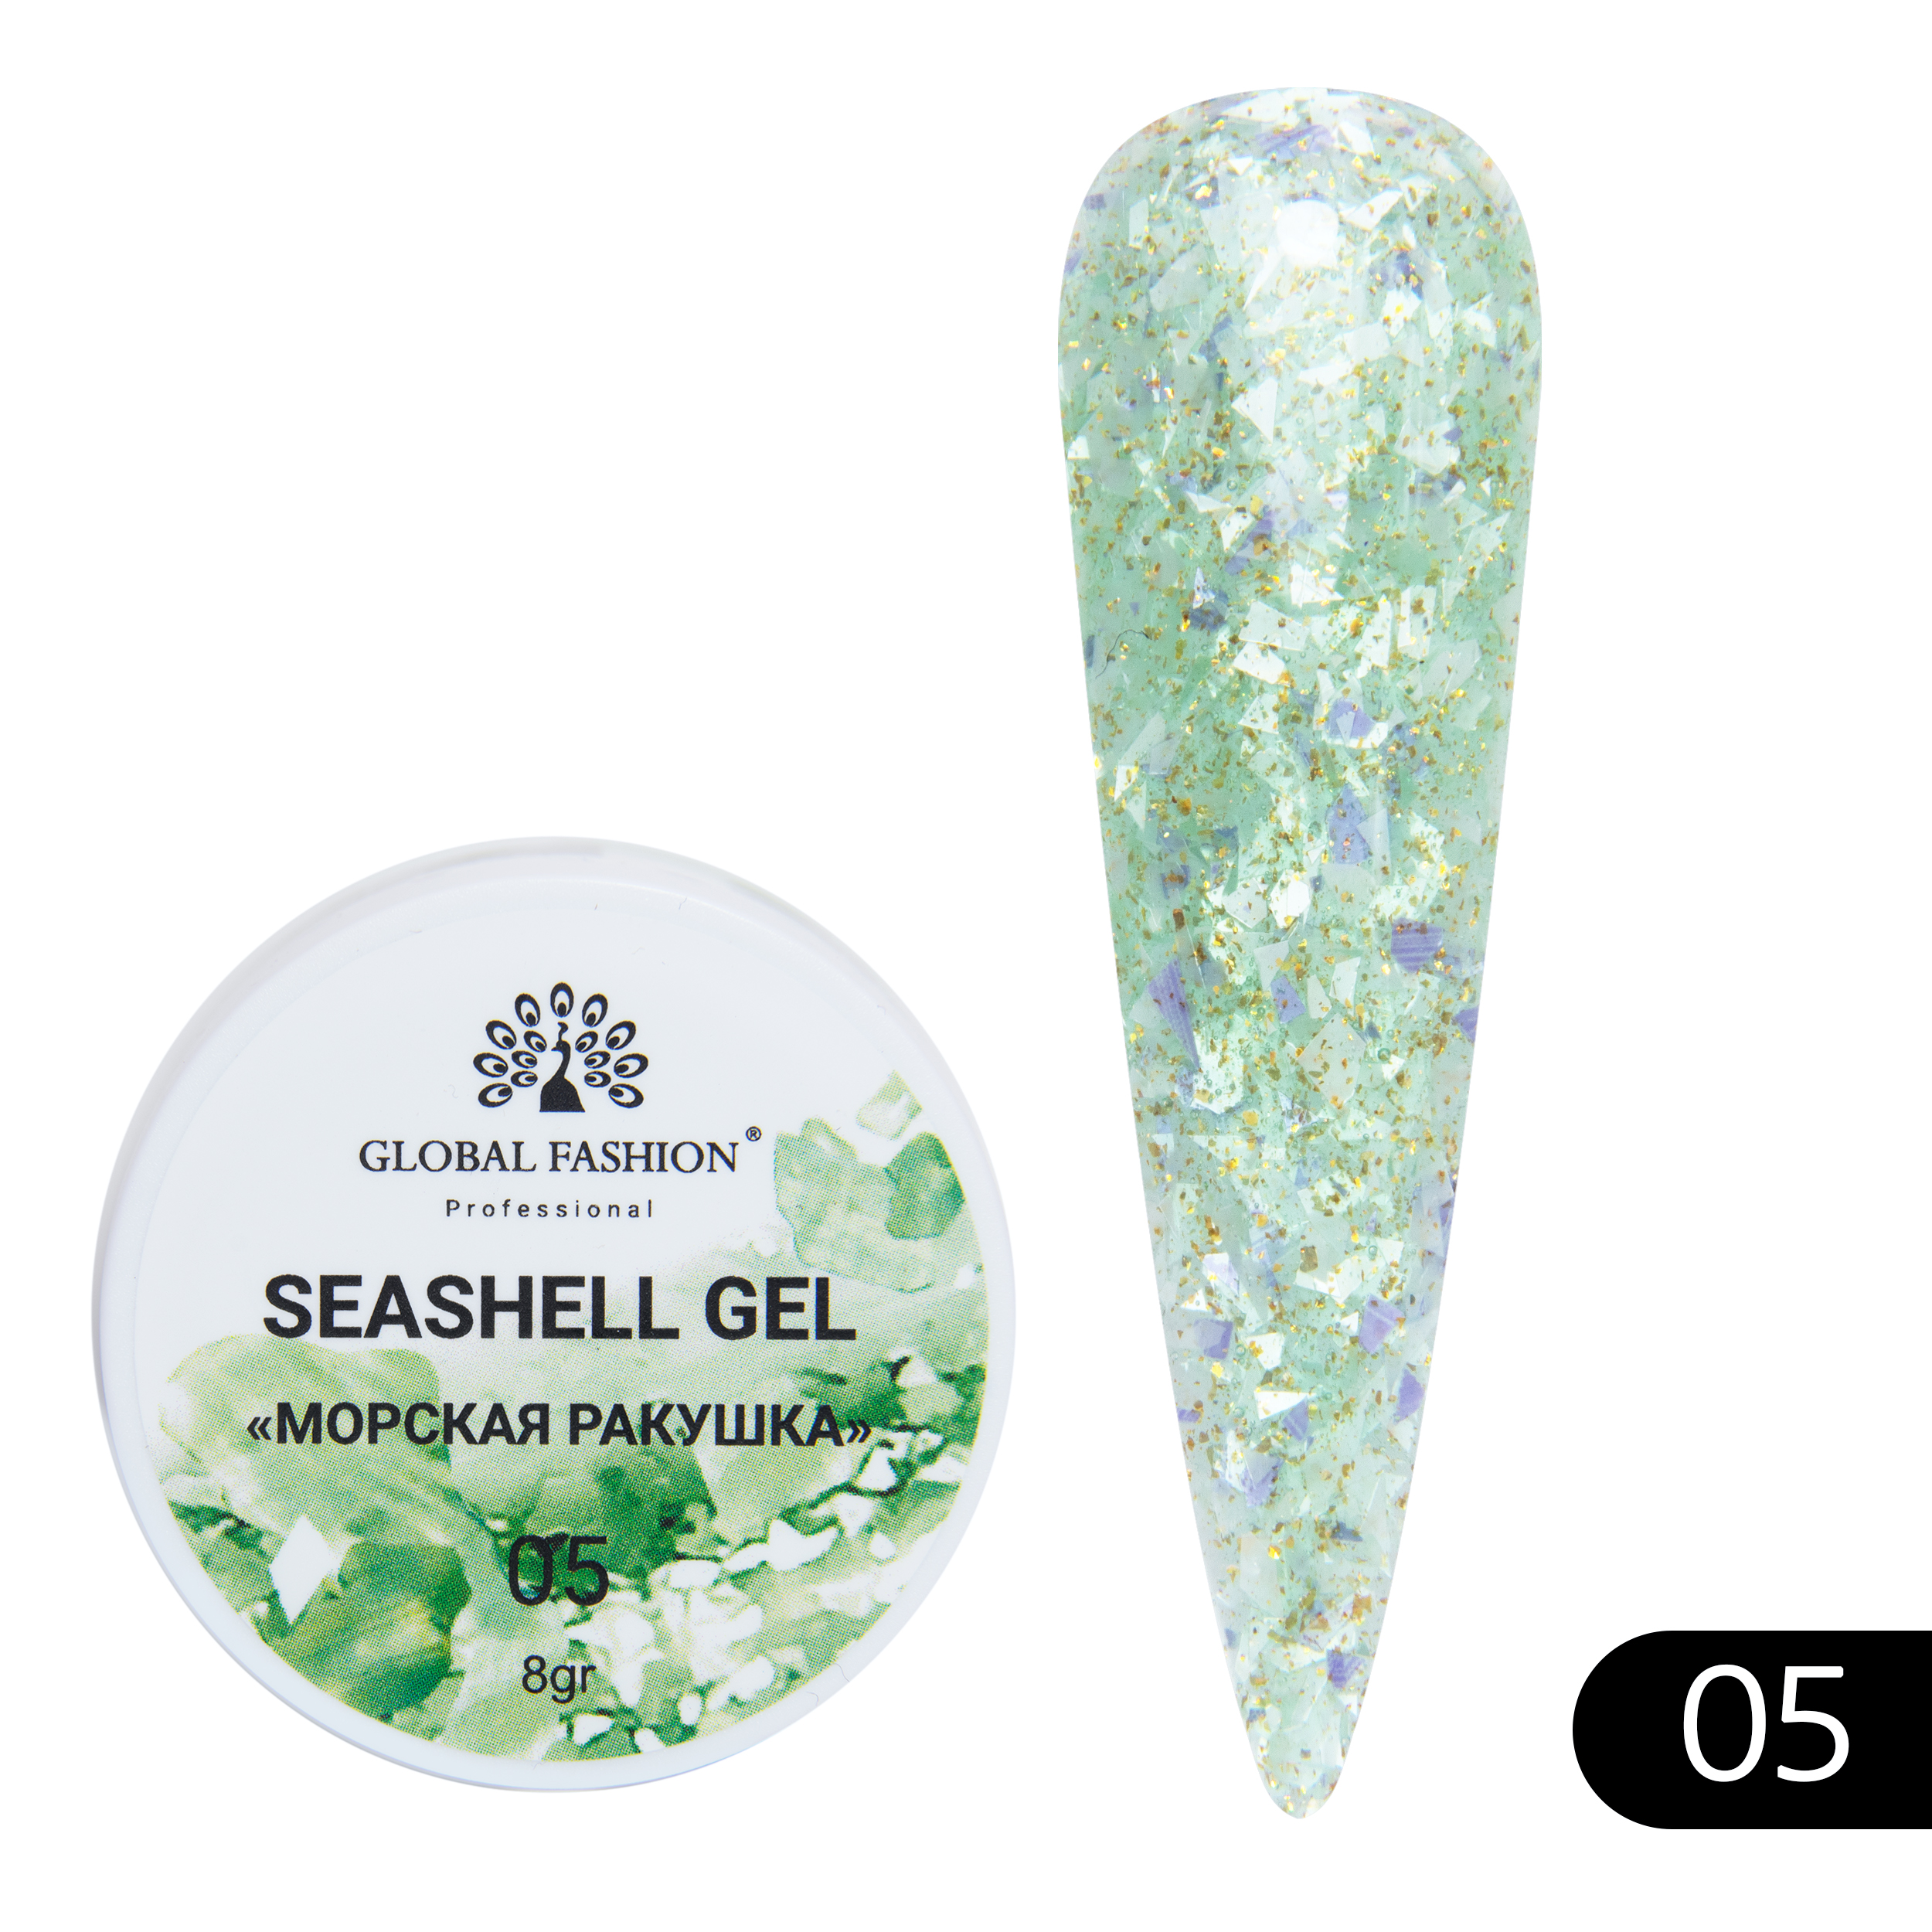 Гель-краска для ногтей Global Fashion с мраморным эффектом ракушки Seashell Gel №05 5 г сачок для аквариумных рыб ferplast 50